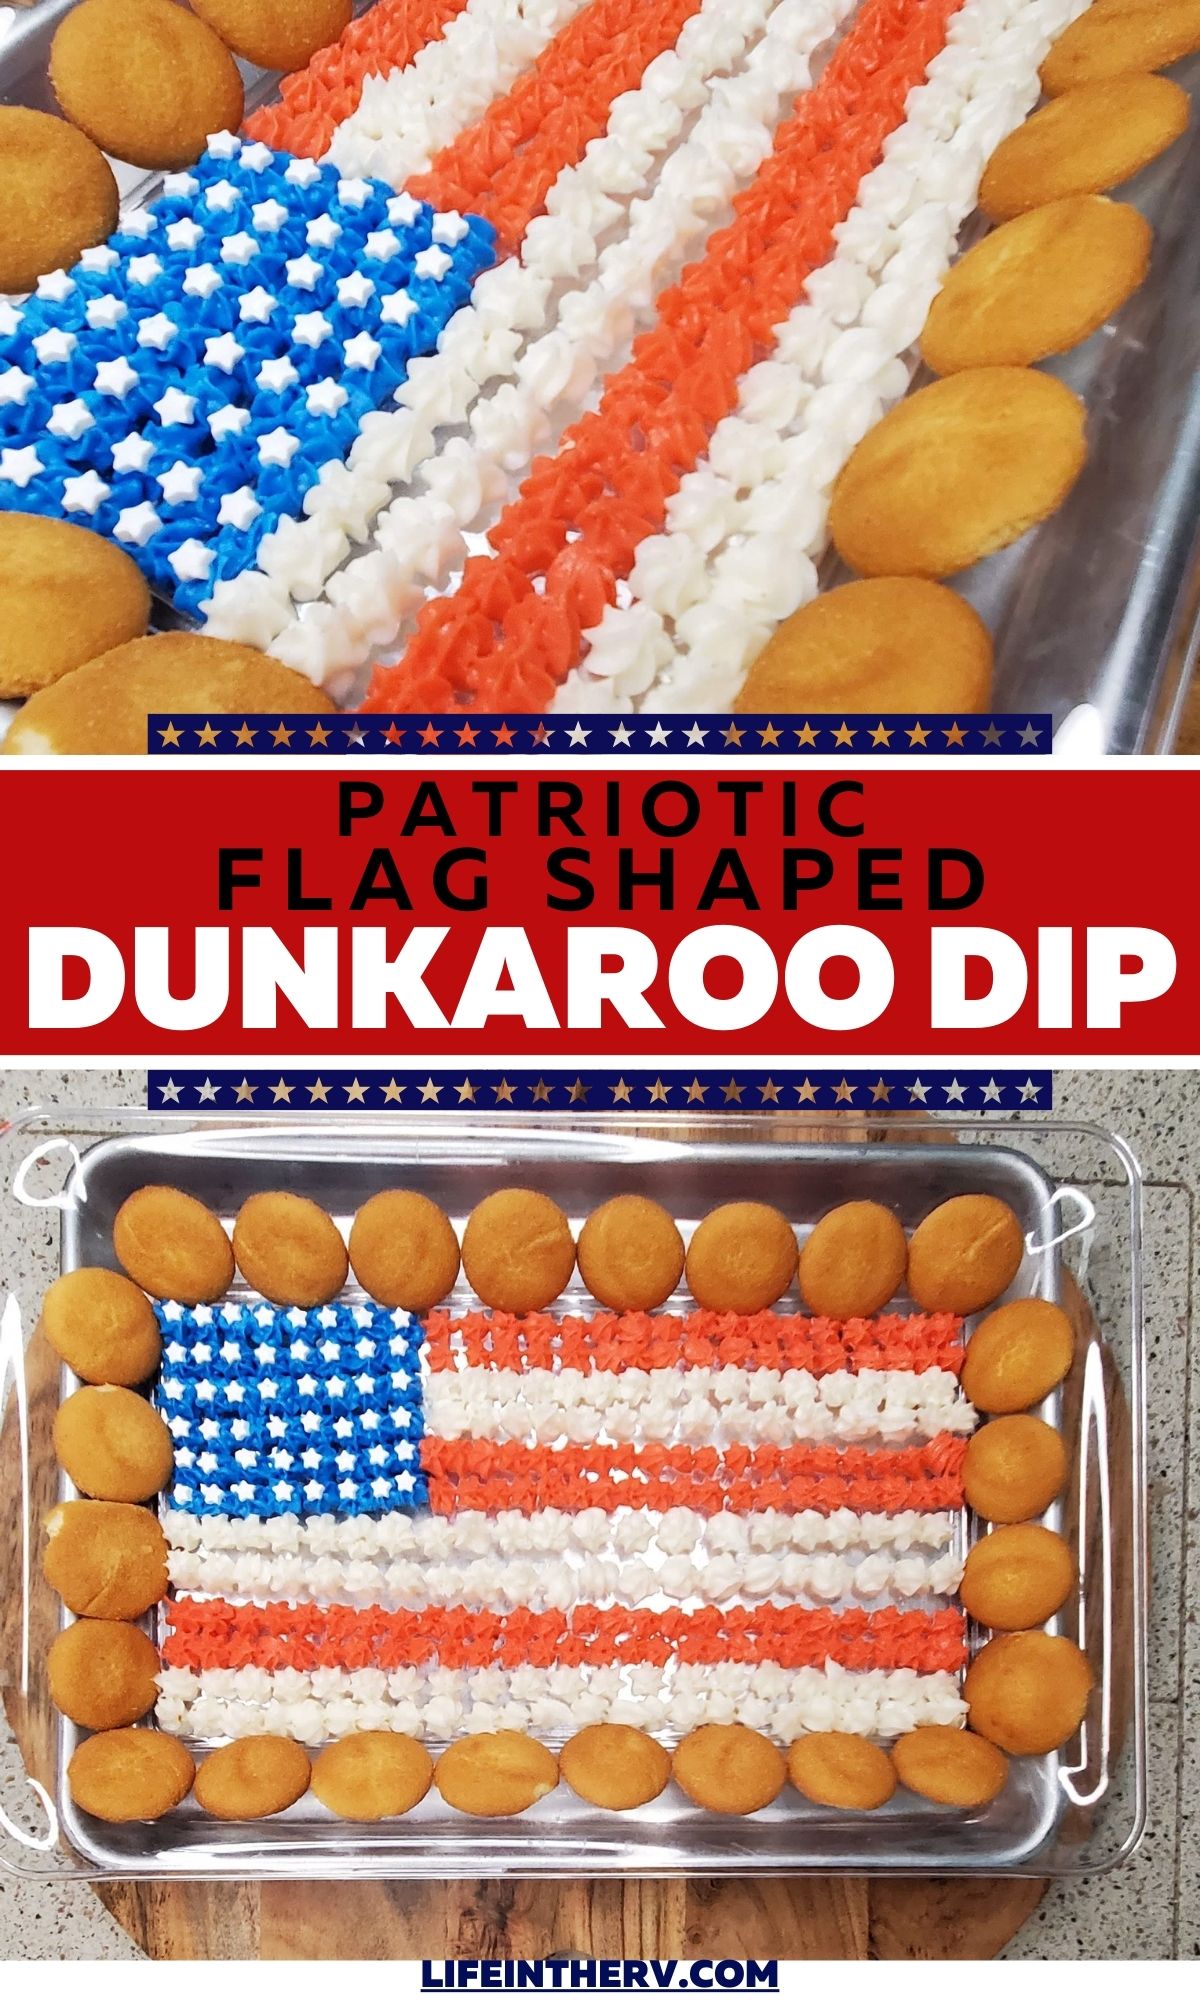 Patriotic Dunkaroo Dip Flag